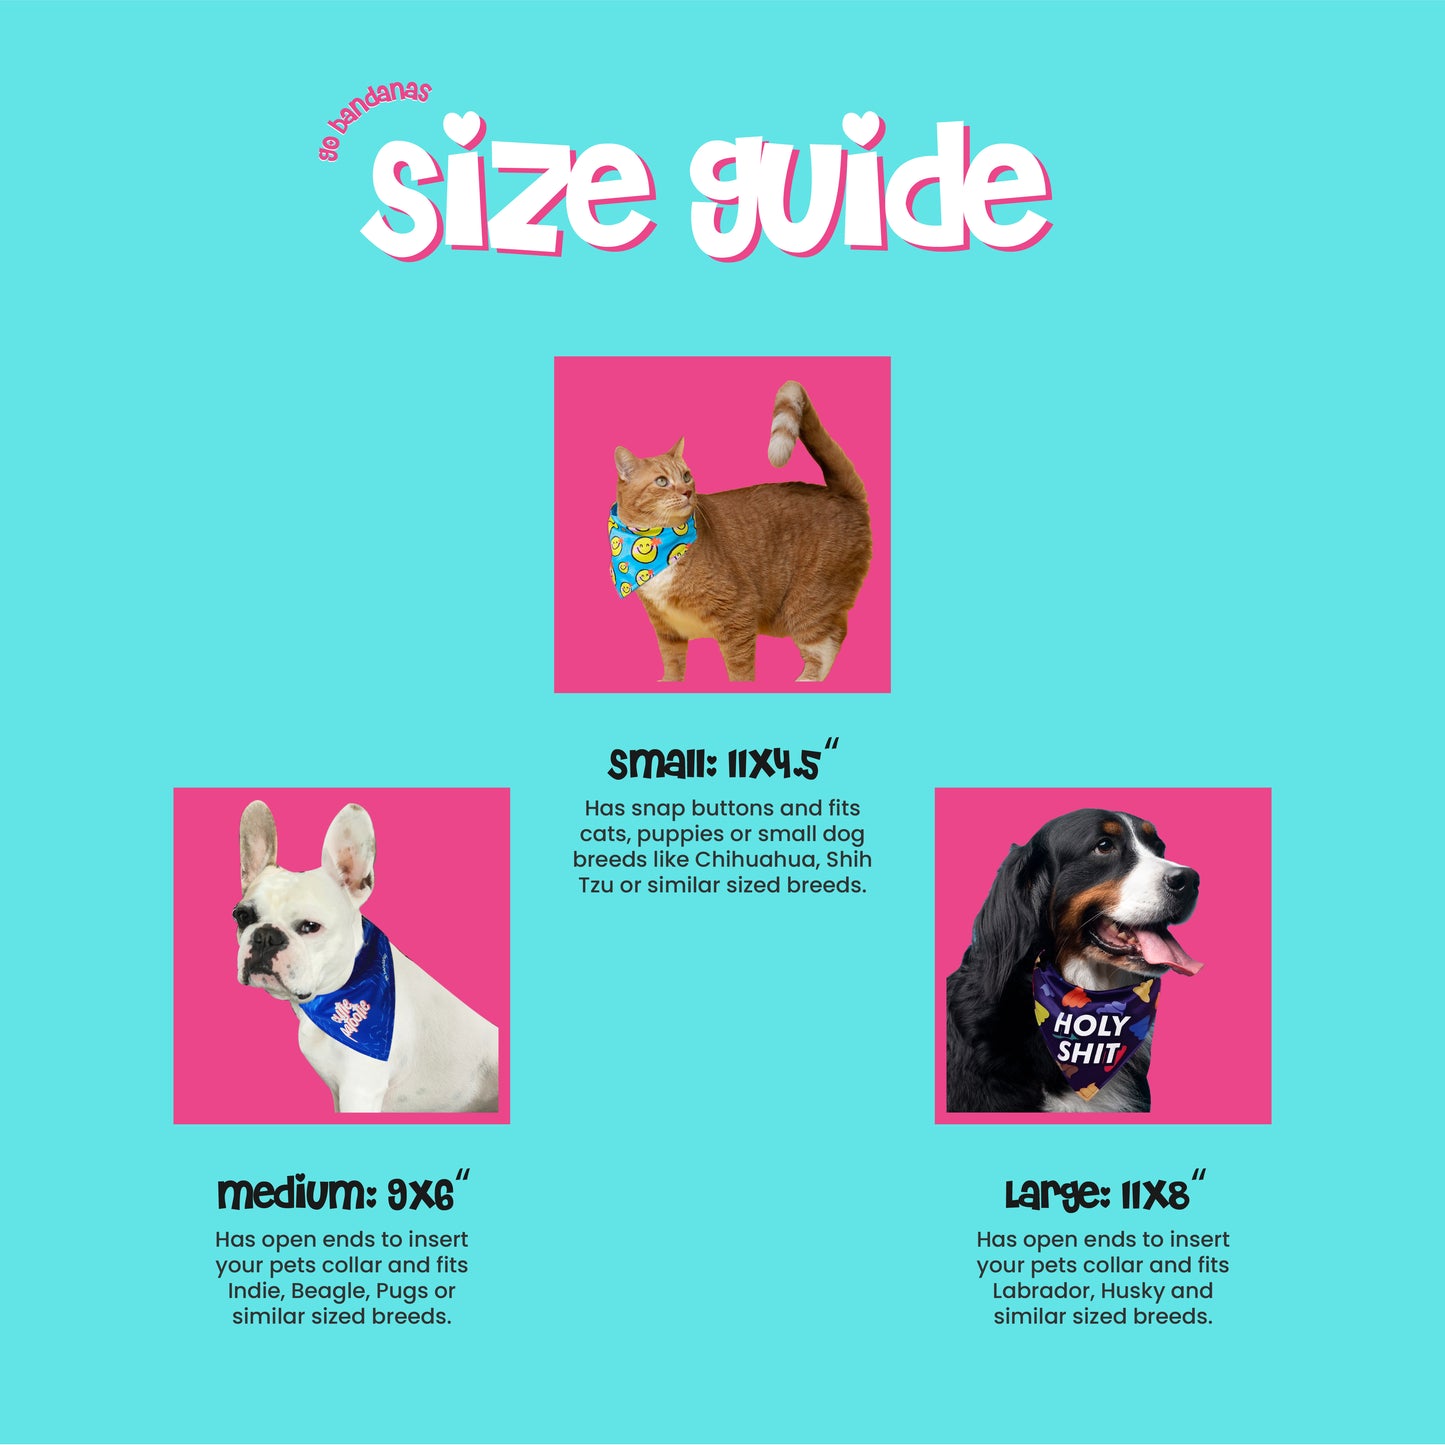 Go Bandanas Reversible Cute Like Laddoo (Blue) & Trouble Maker (Pink) Adjustable Bandana for Pet Dogs & Cats